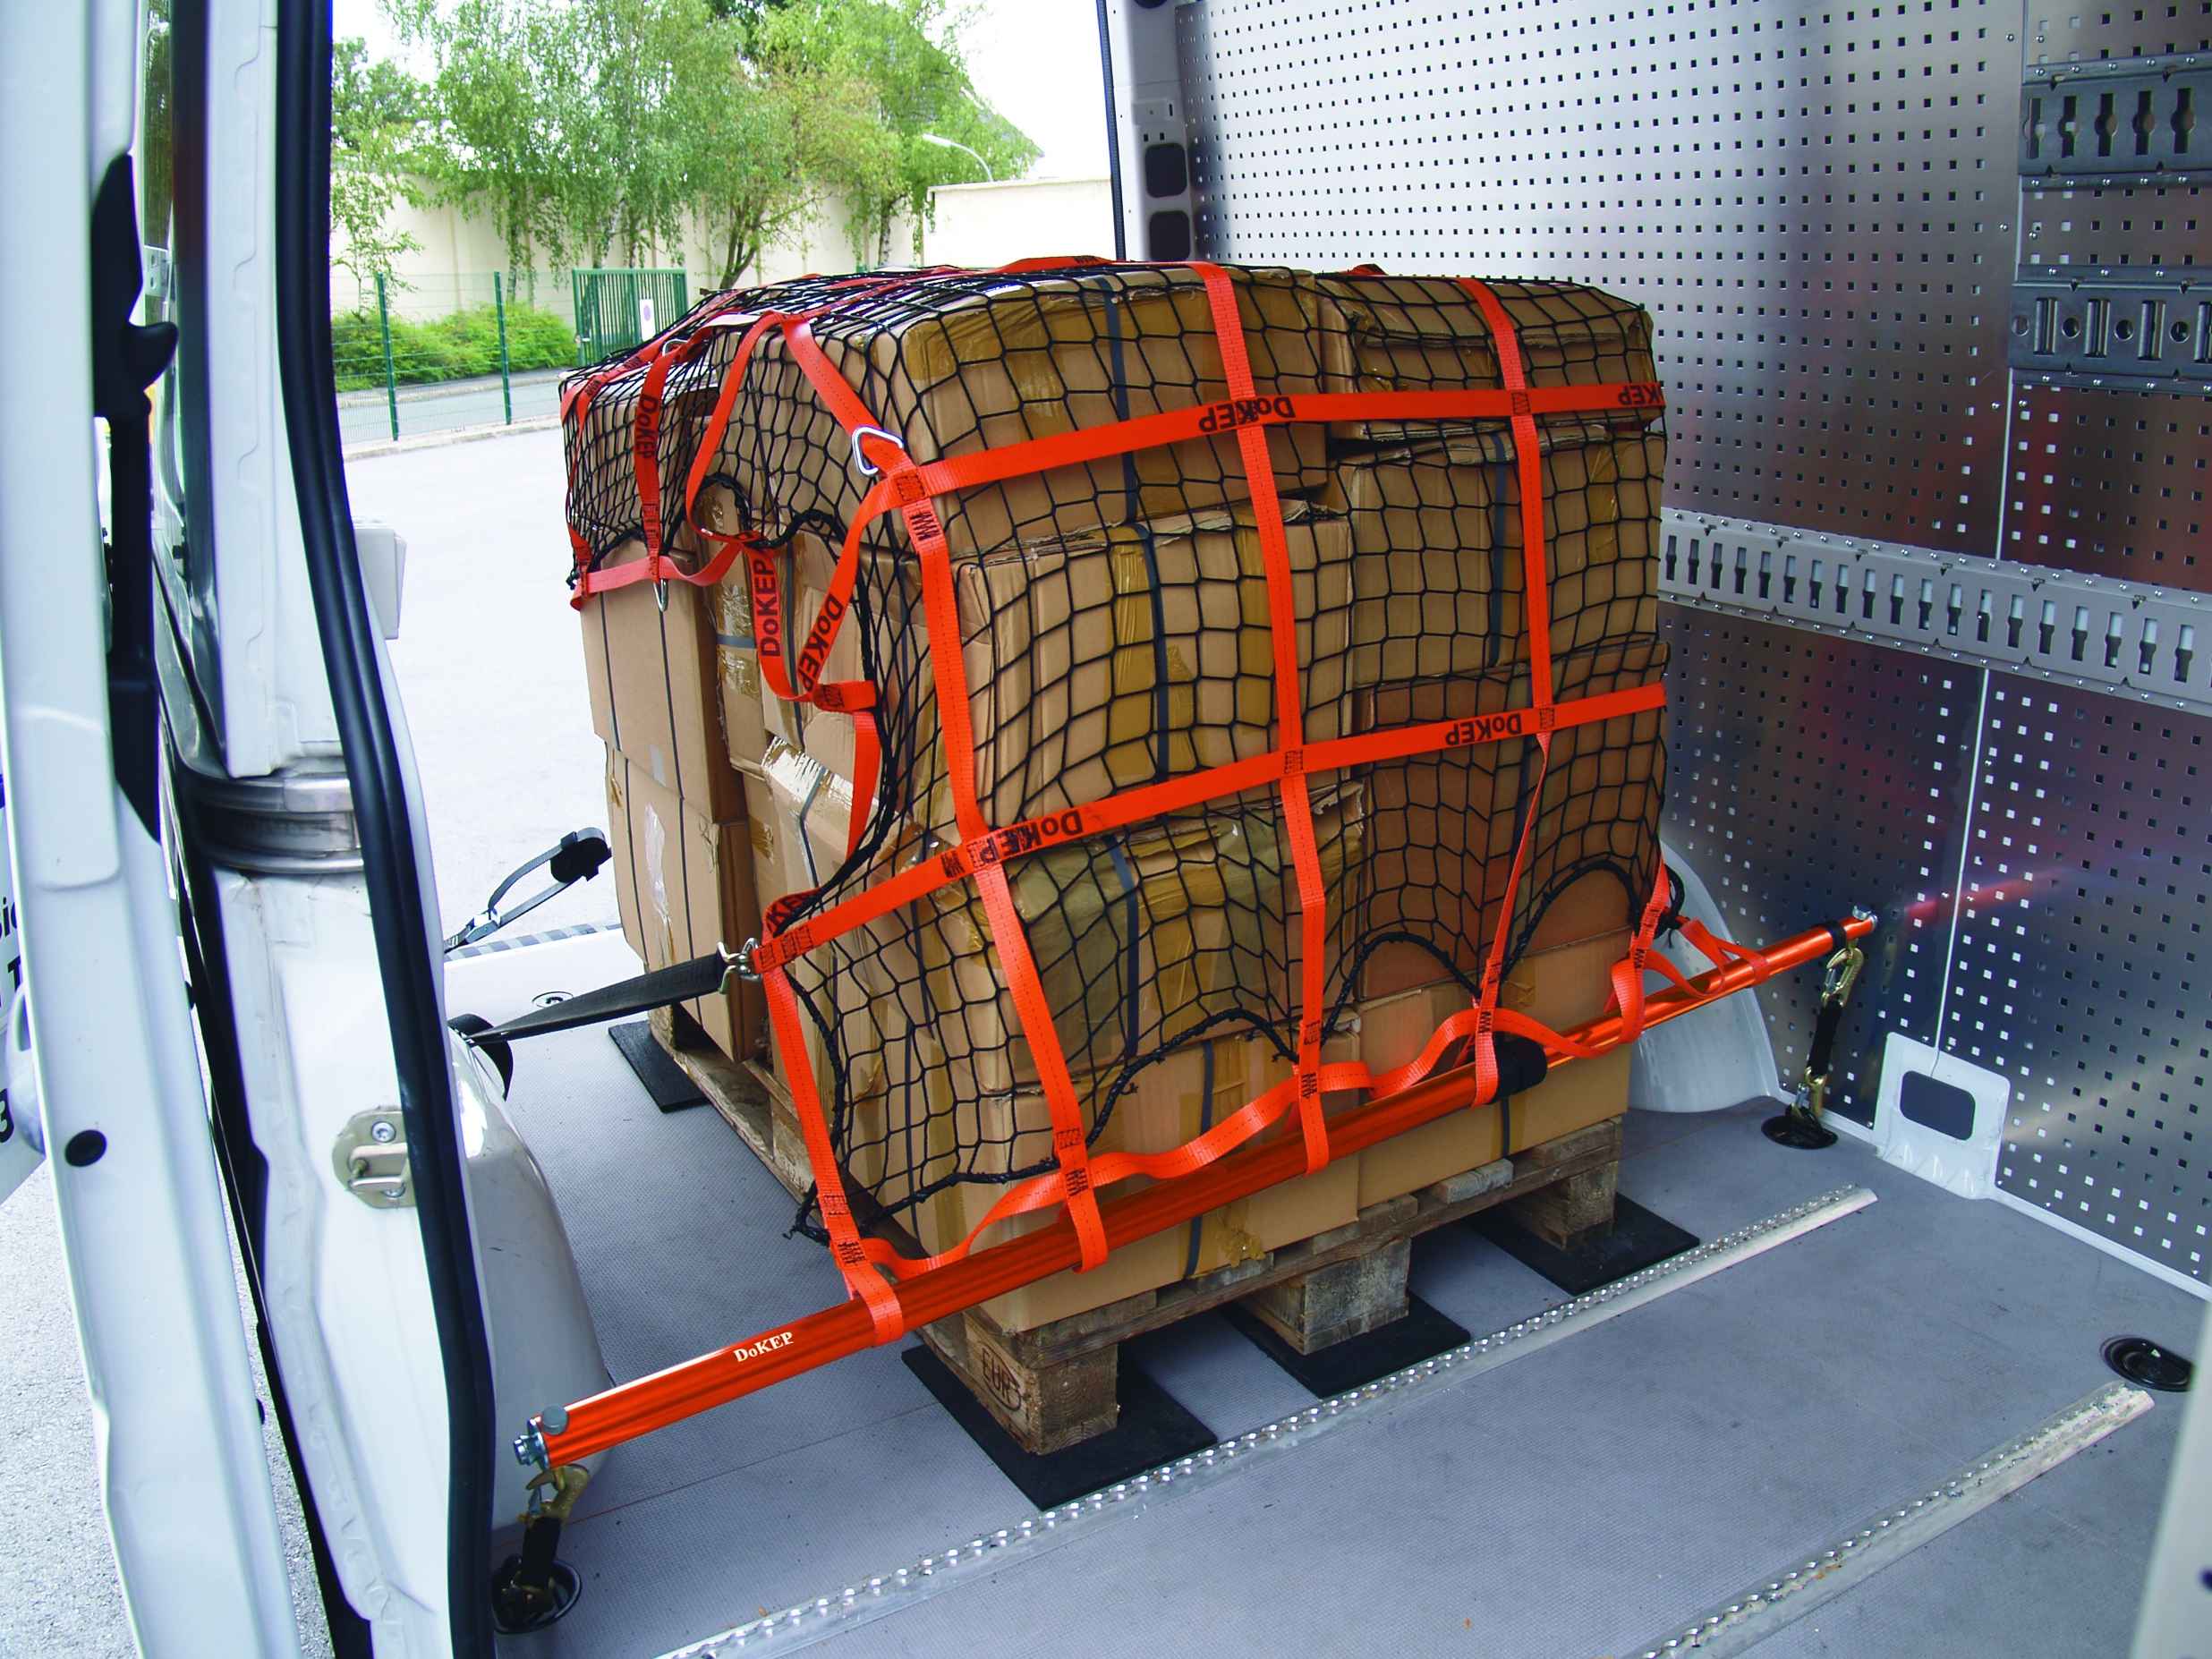 Doleco USA's cargo restraint system